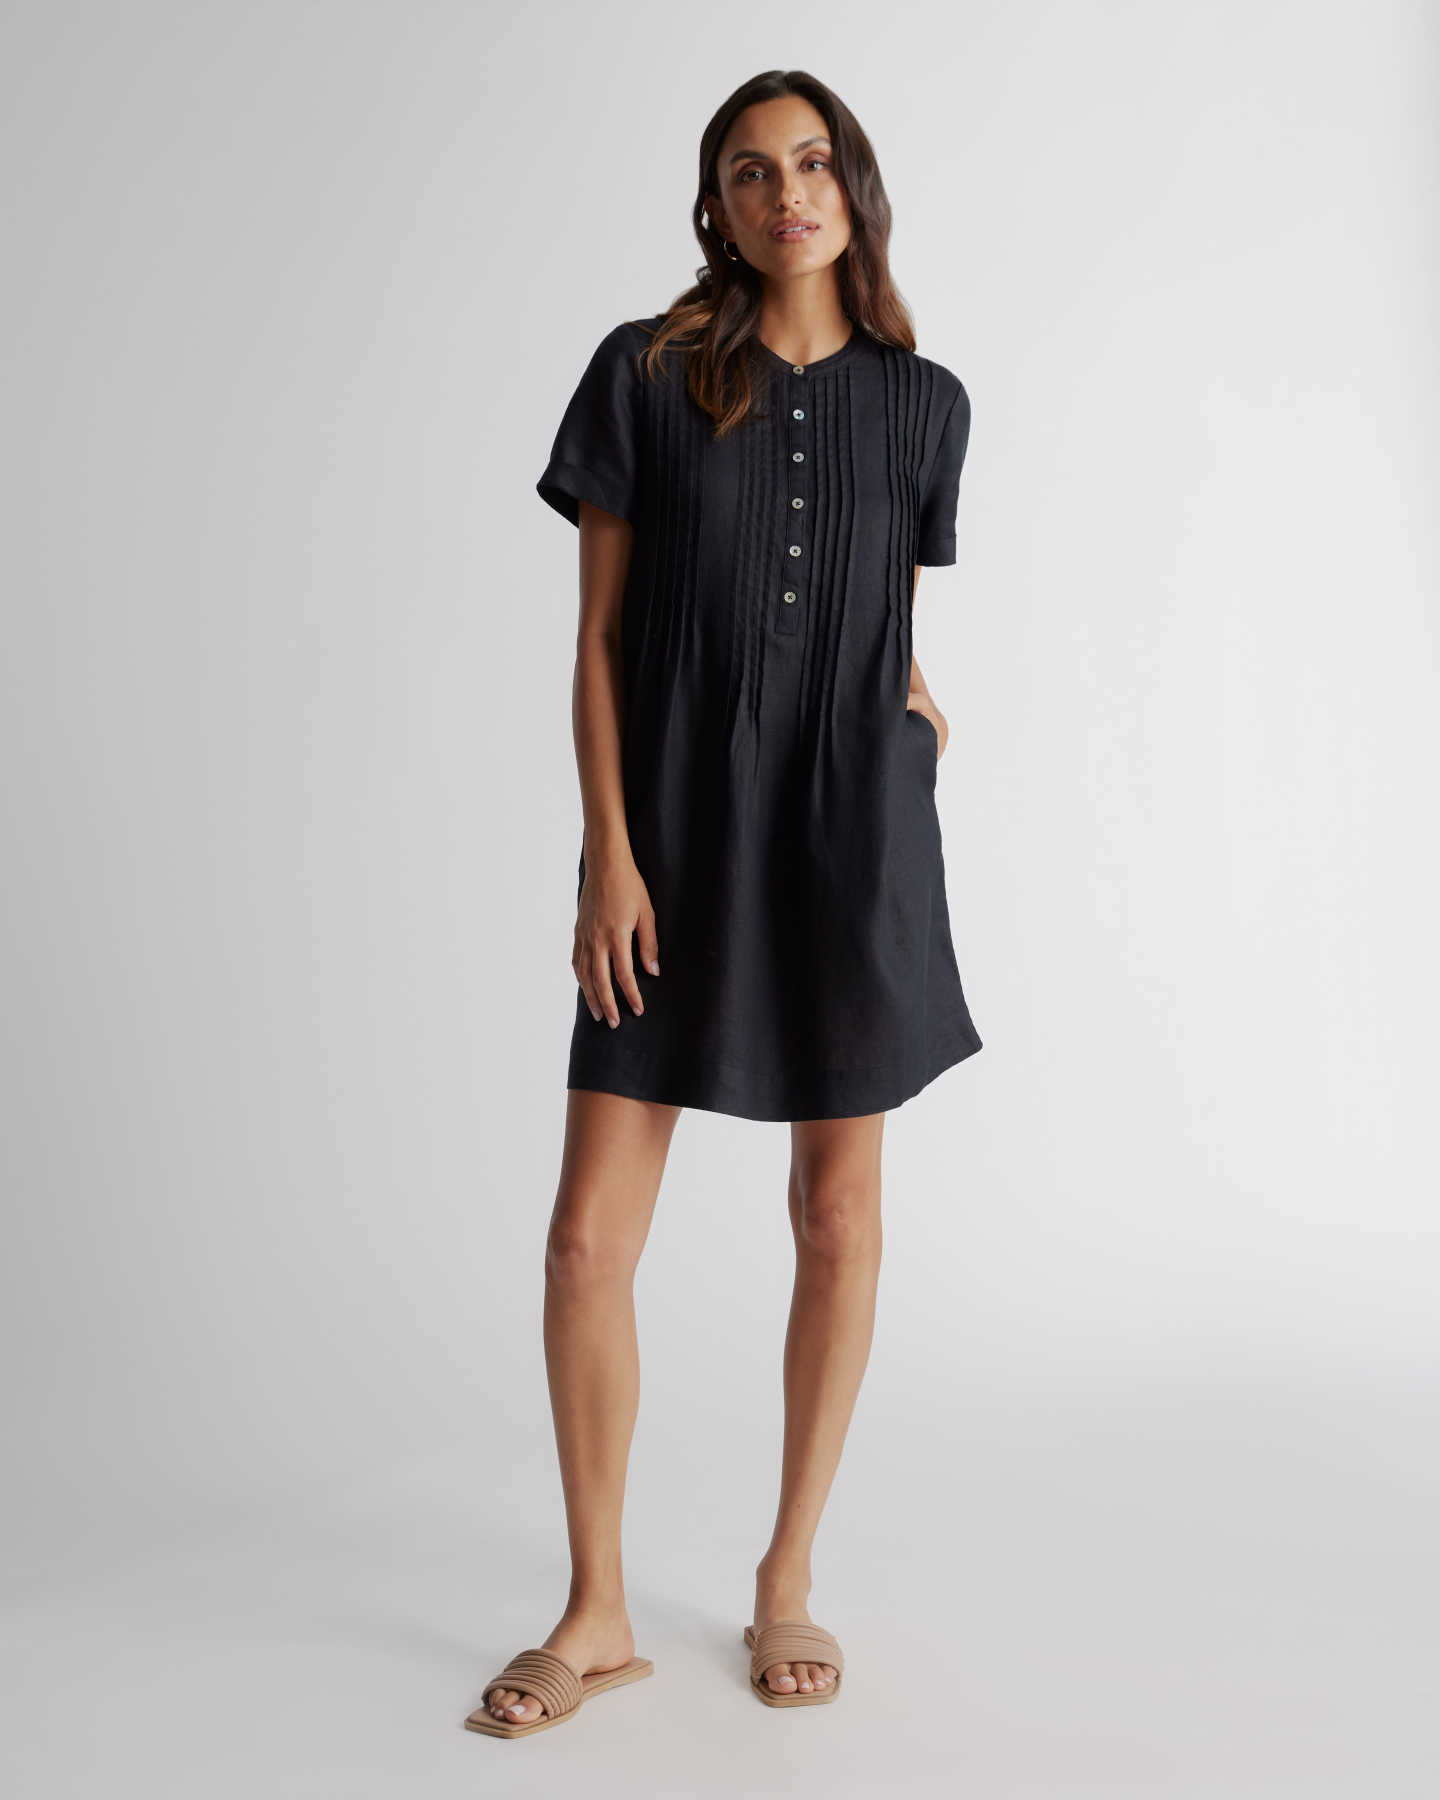 100% European Linen Short Sleeve Swing Dress  - Black - 2